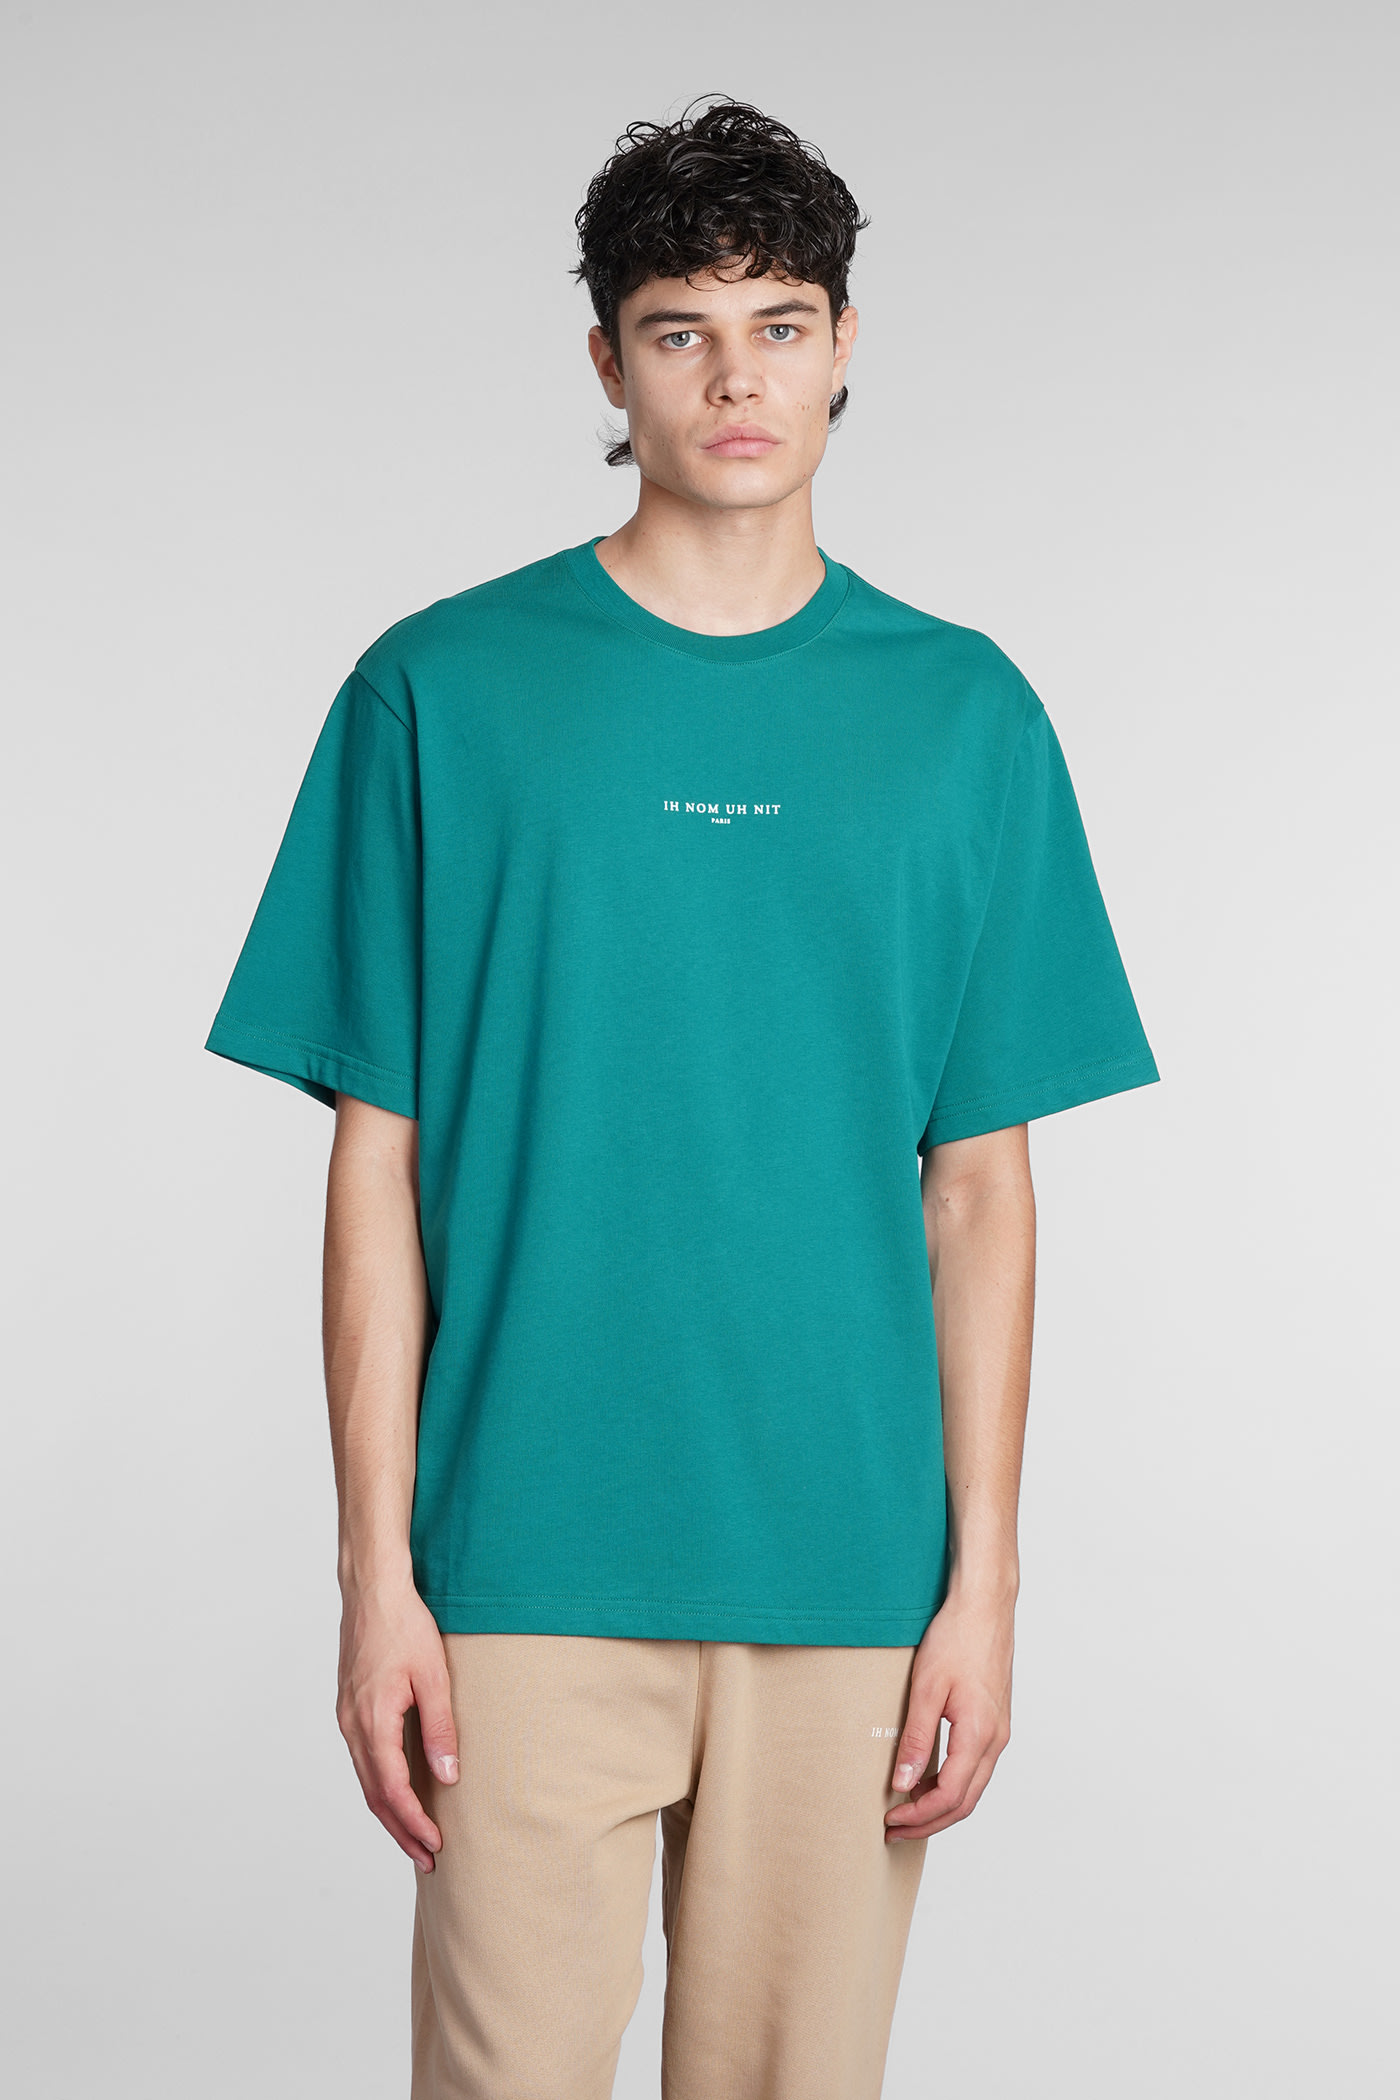 Ih nom uh nit T-shirt In Green Cotton